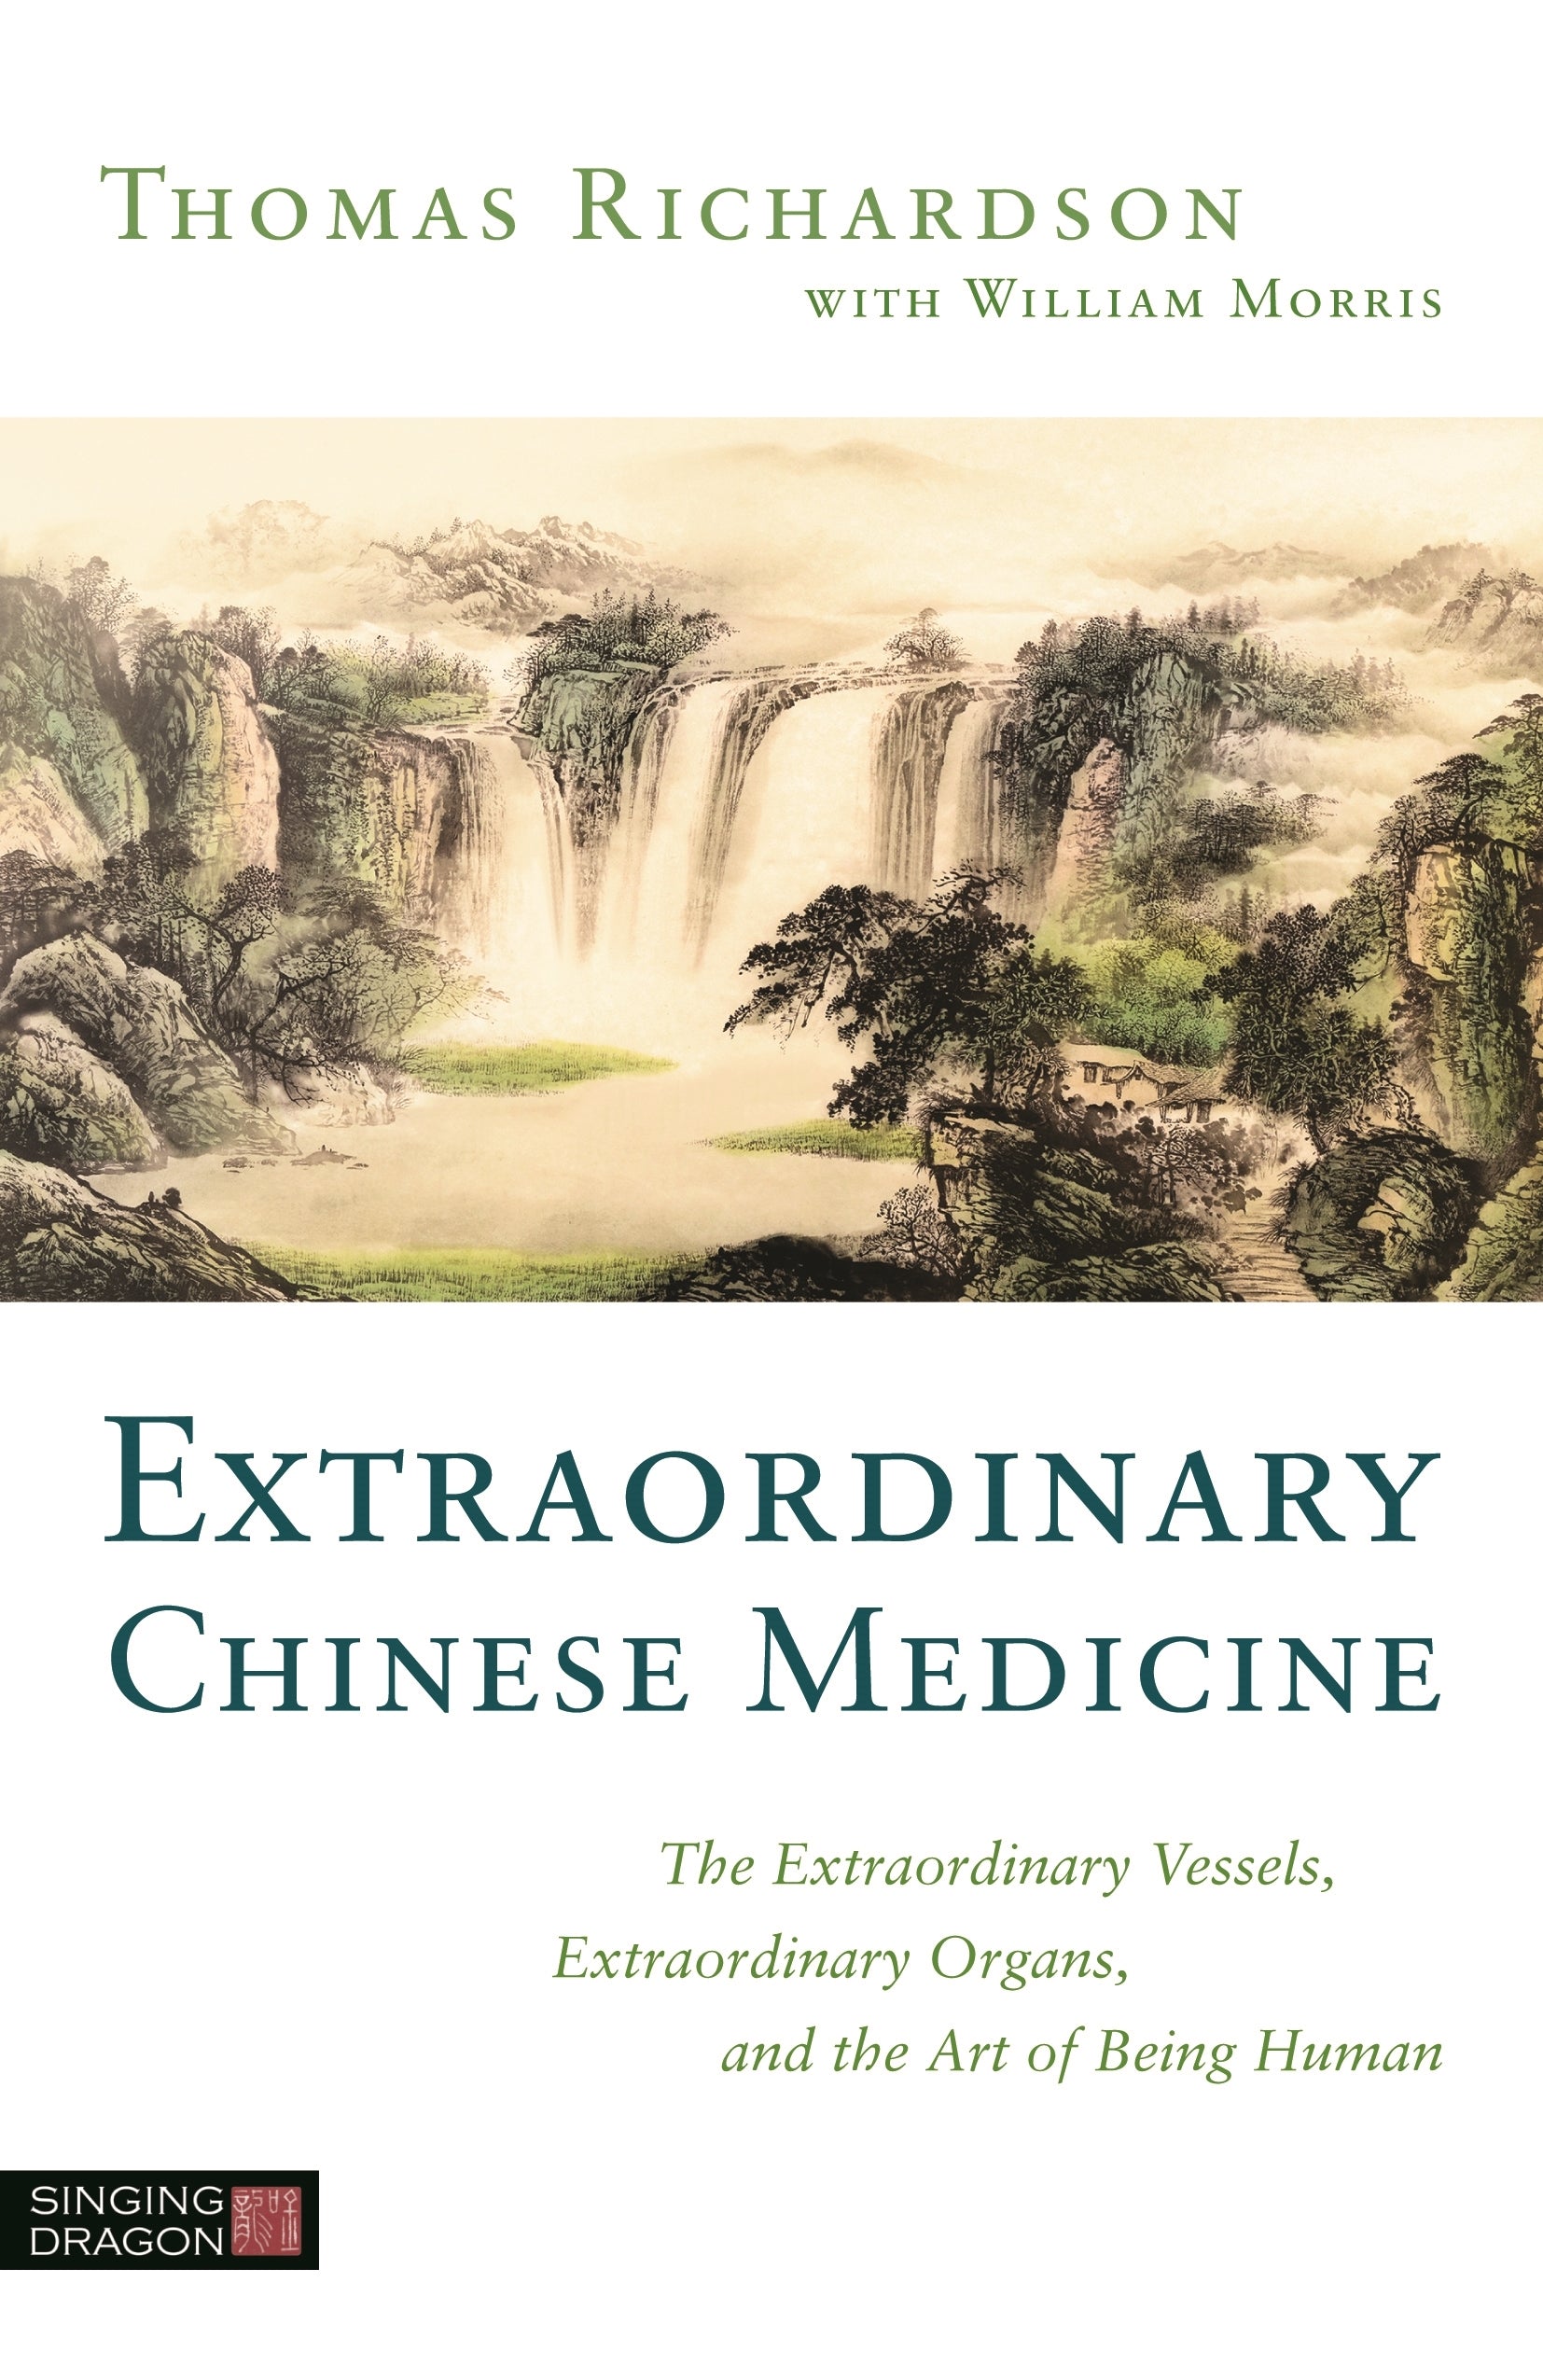 Extraordinary Chinese Medicine by William R. Morris, Thomas Richardson